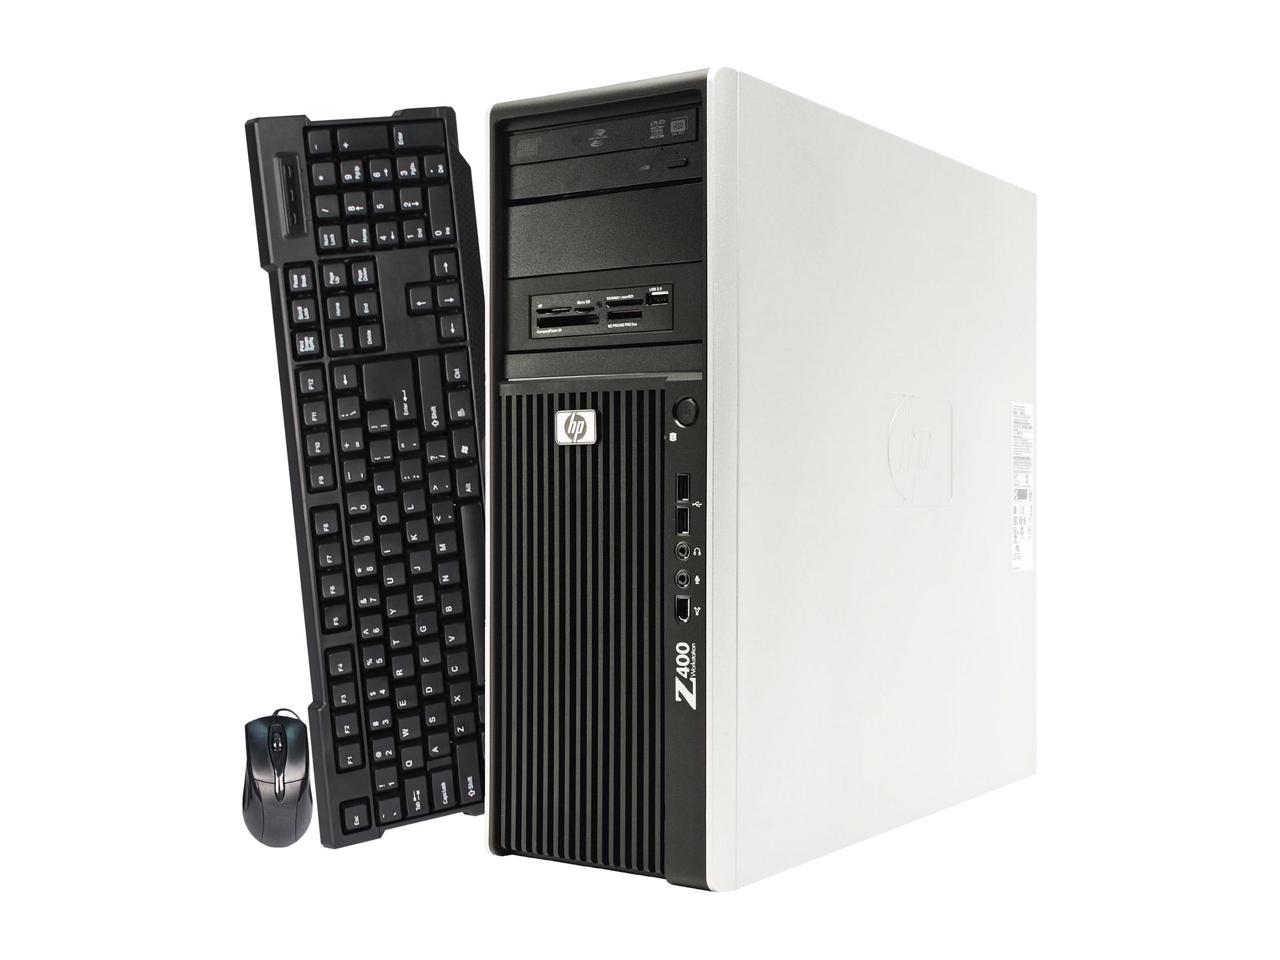 HP Desktop Computer Z400 Xeon W3550 (3.06 GHz) 8 GB DDR3 2 TB HDD ATI Radeon HD 3450 Windows 10 Pro Multi-Language, English / Spanish